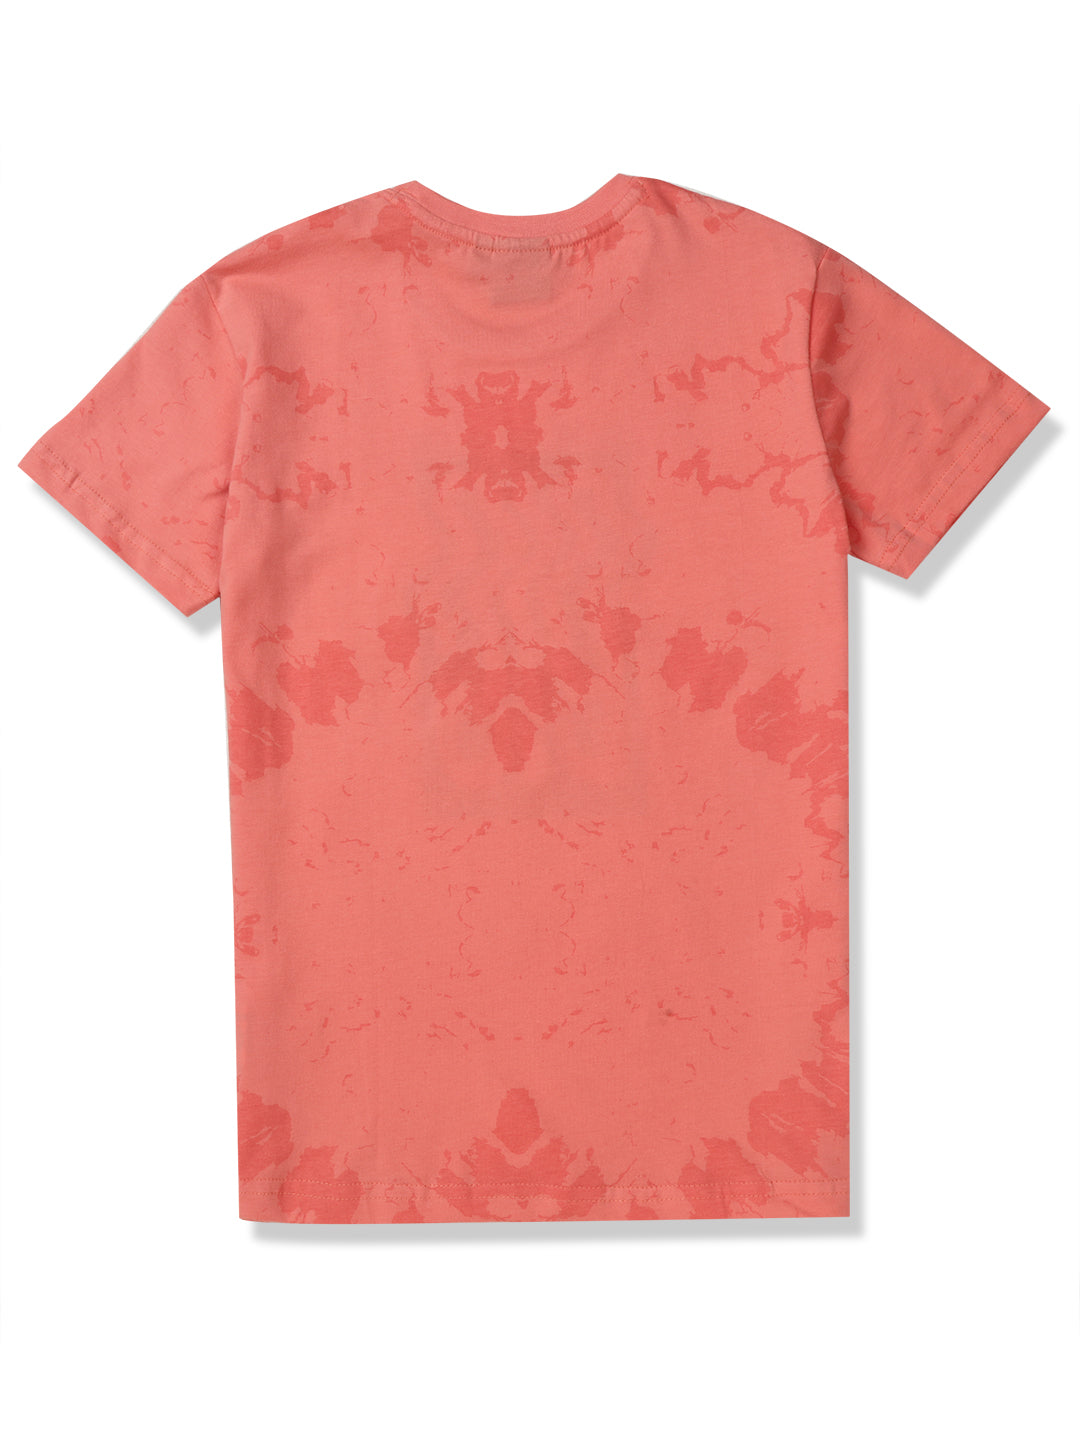 Boys Peach Printed Knits T-Shirt